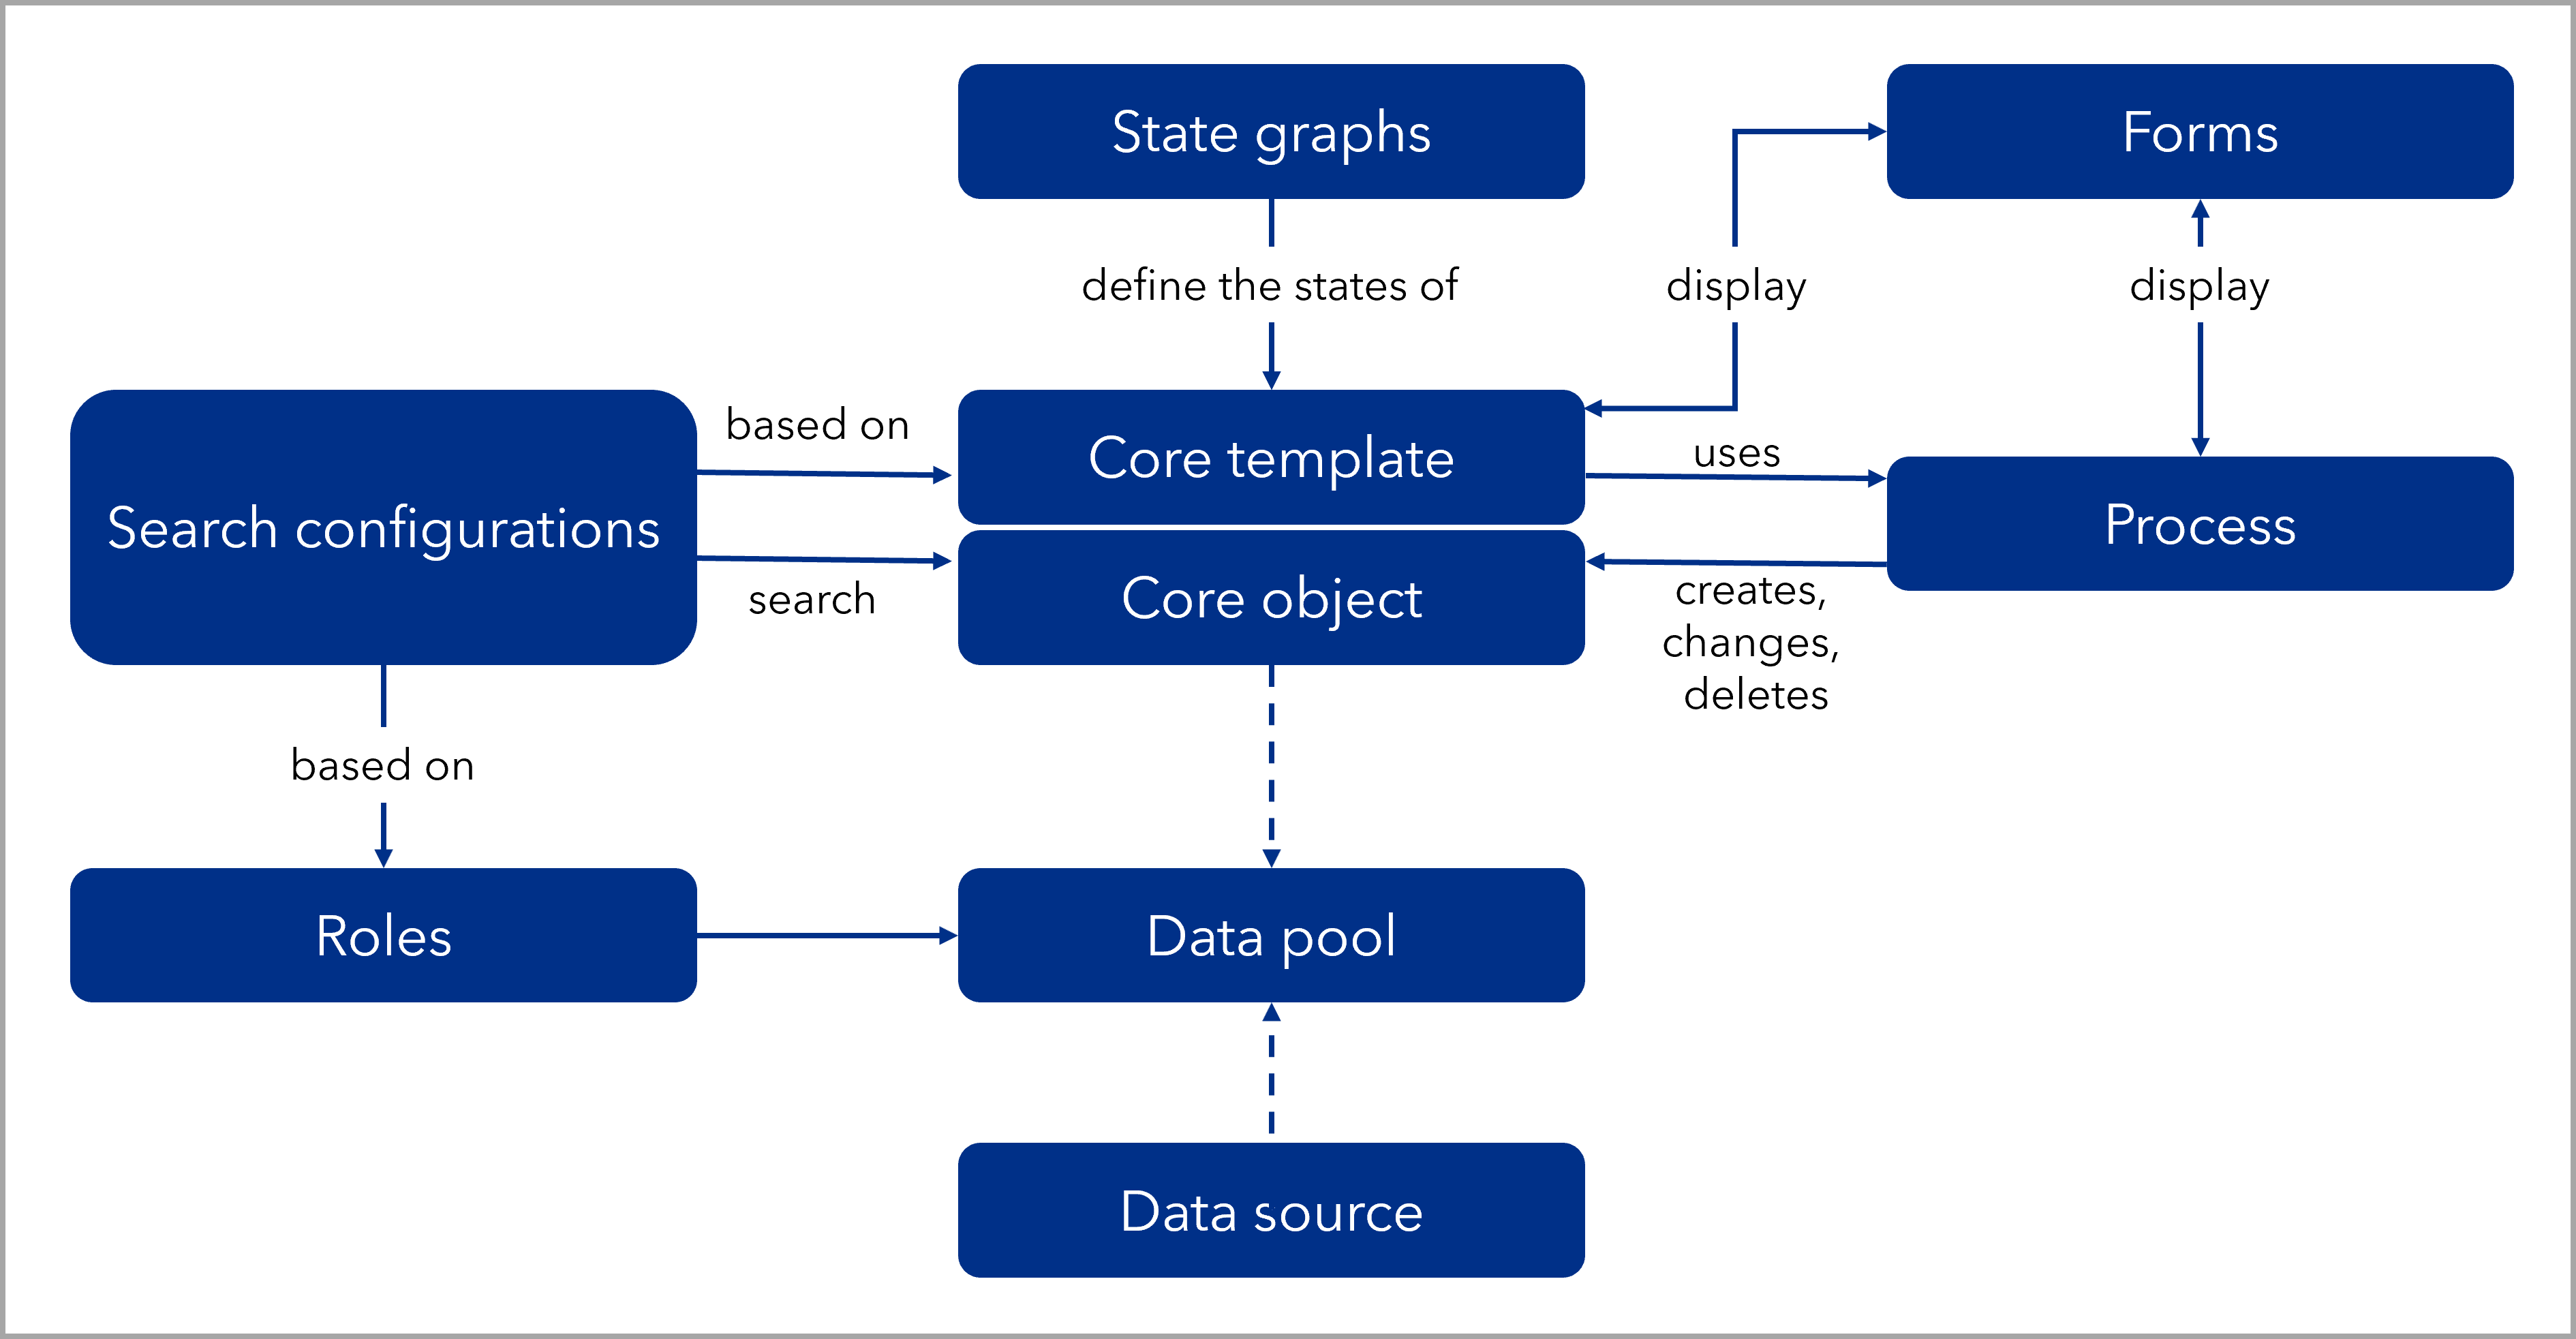 Configuration items in PRIME